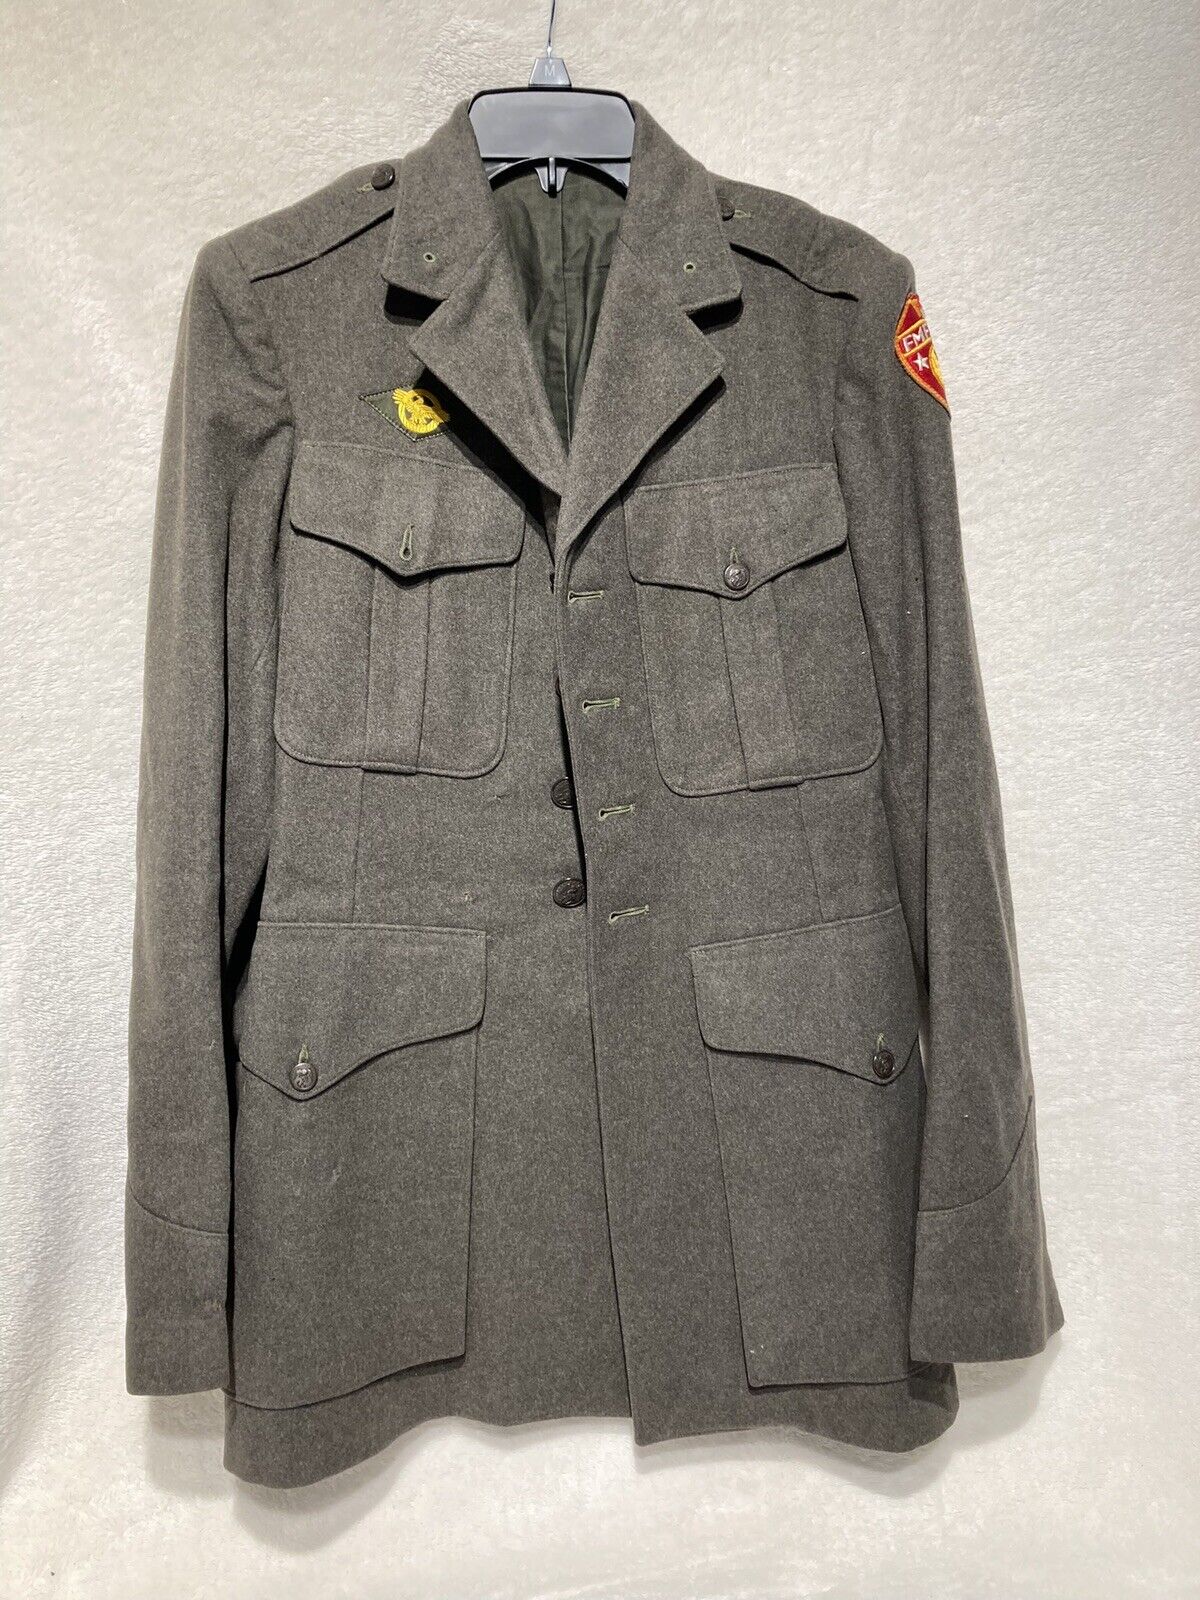 Vintage WW II Marine Wool Dress Jacket with FMF-PAC Patch 